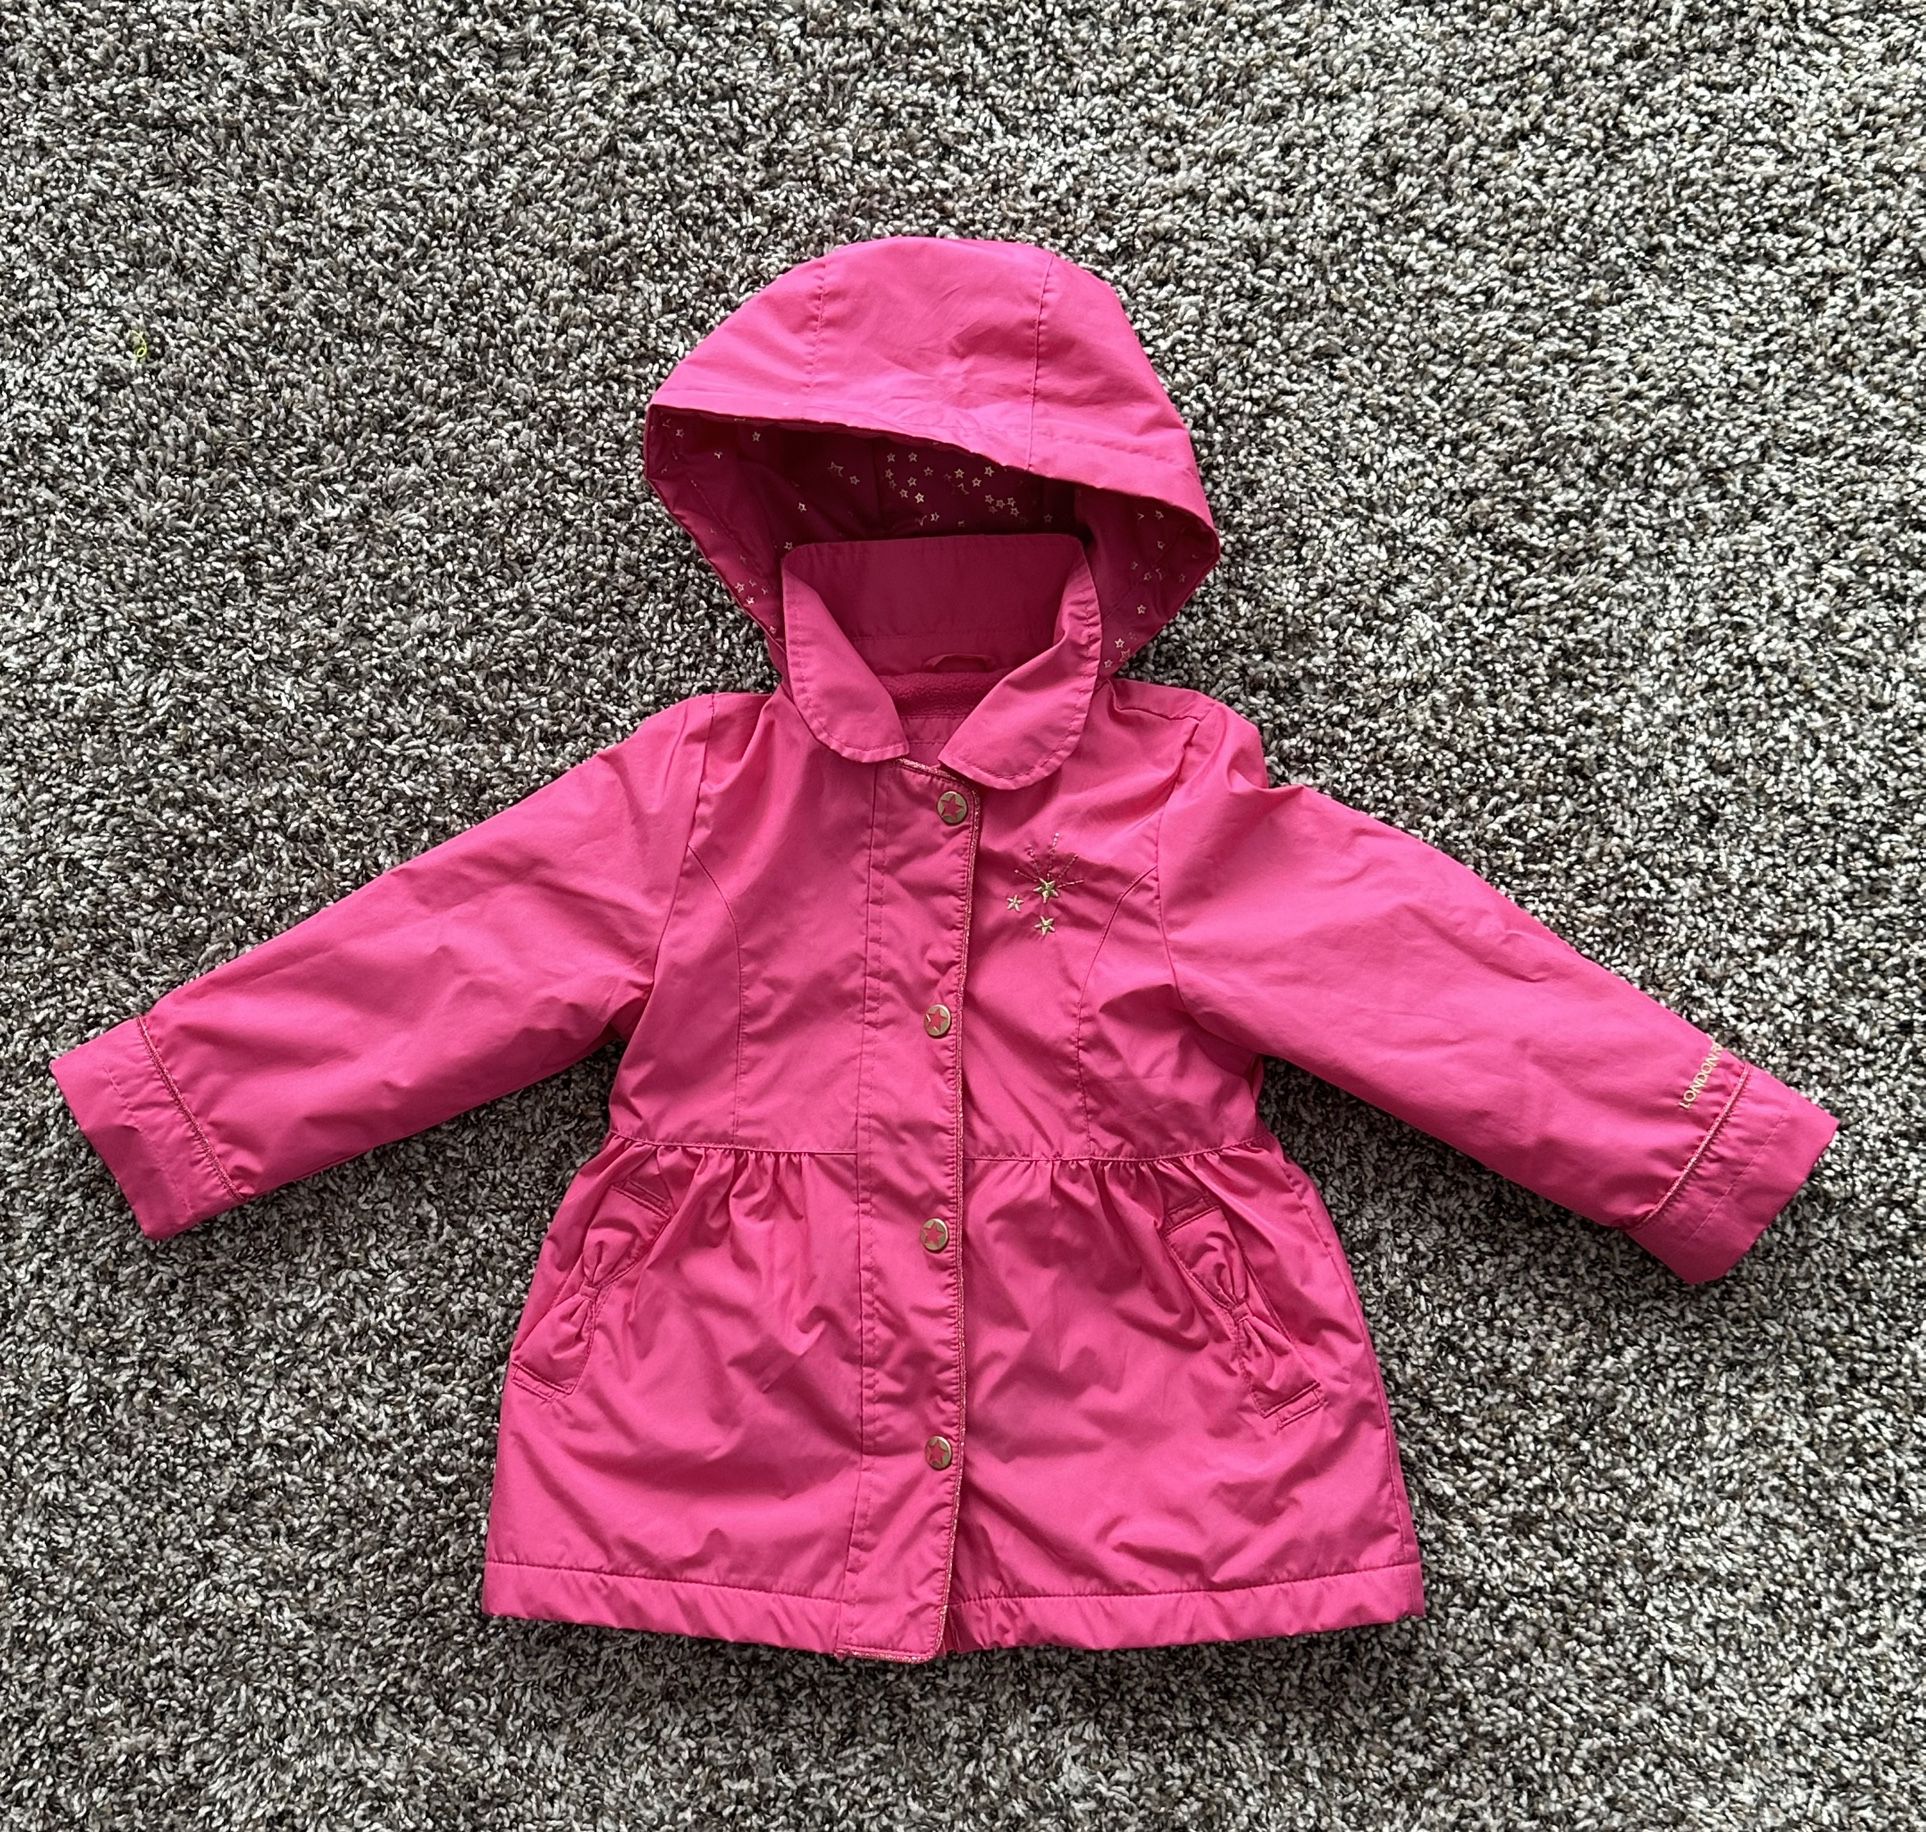 Toddler Girl London Fog Jacket Size 3T